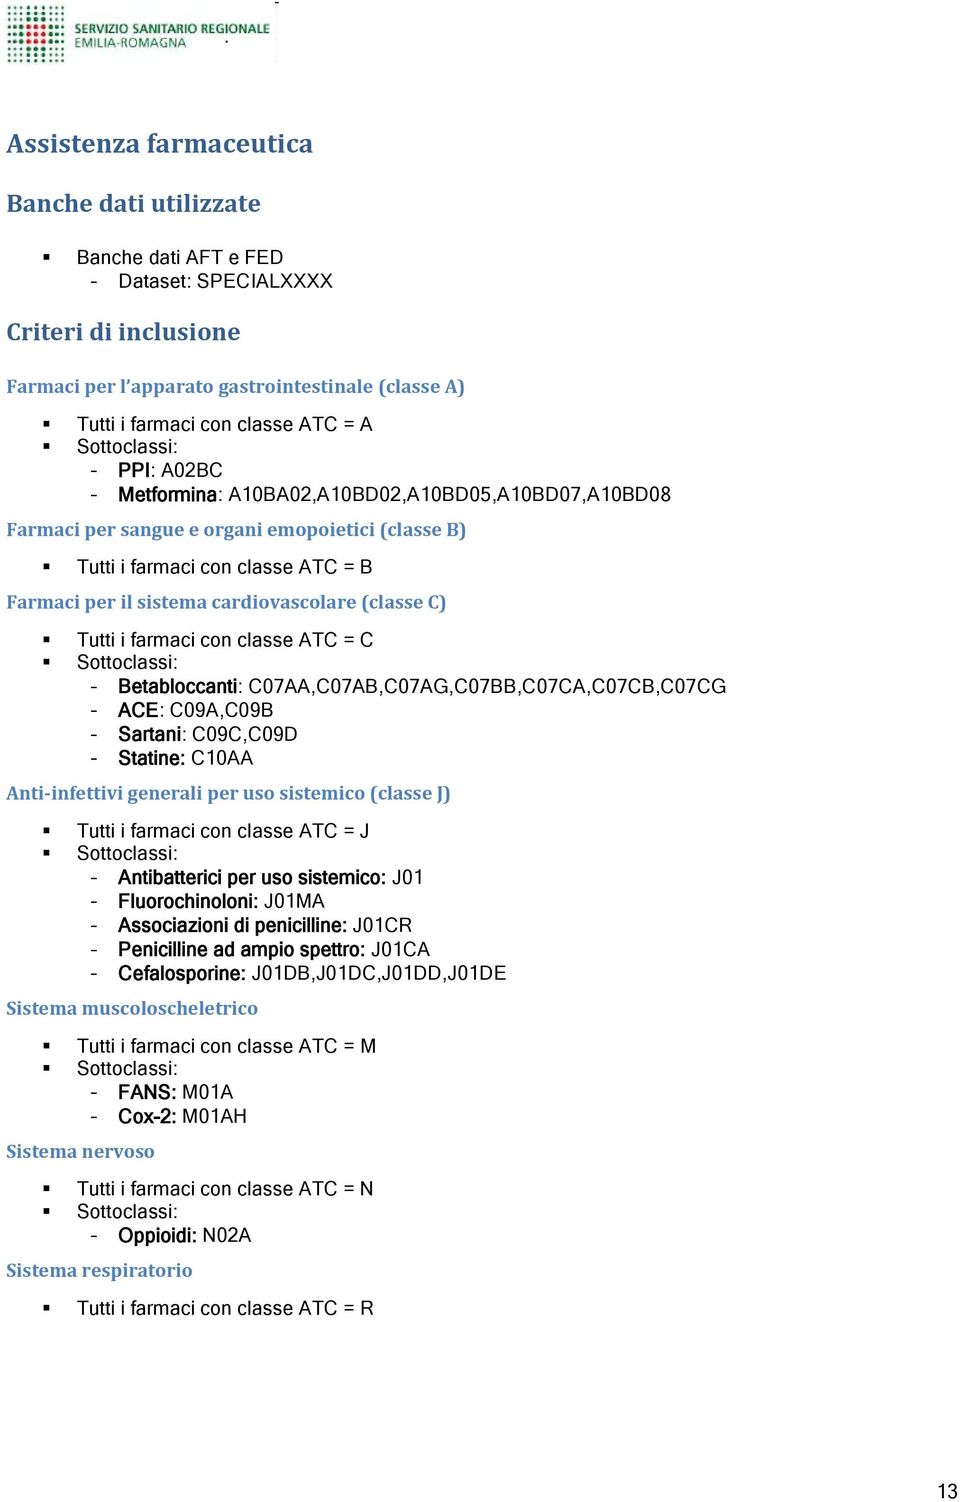 cardiovascolare (classe C) Tutti i farmaci con classe ATC = C Sottoclassi: - Betabloccanti: C07AA,C07AB,C07AG,C07BB,C07CA,C07CB,C07CG - ACE: C09A,C09B - Sartani: C09C,C09D - Statine: C10AA